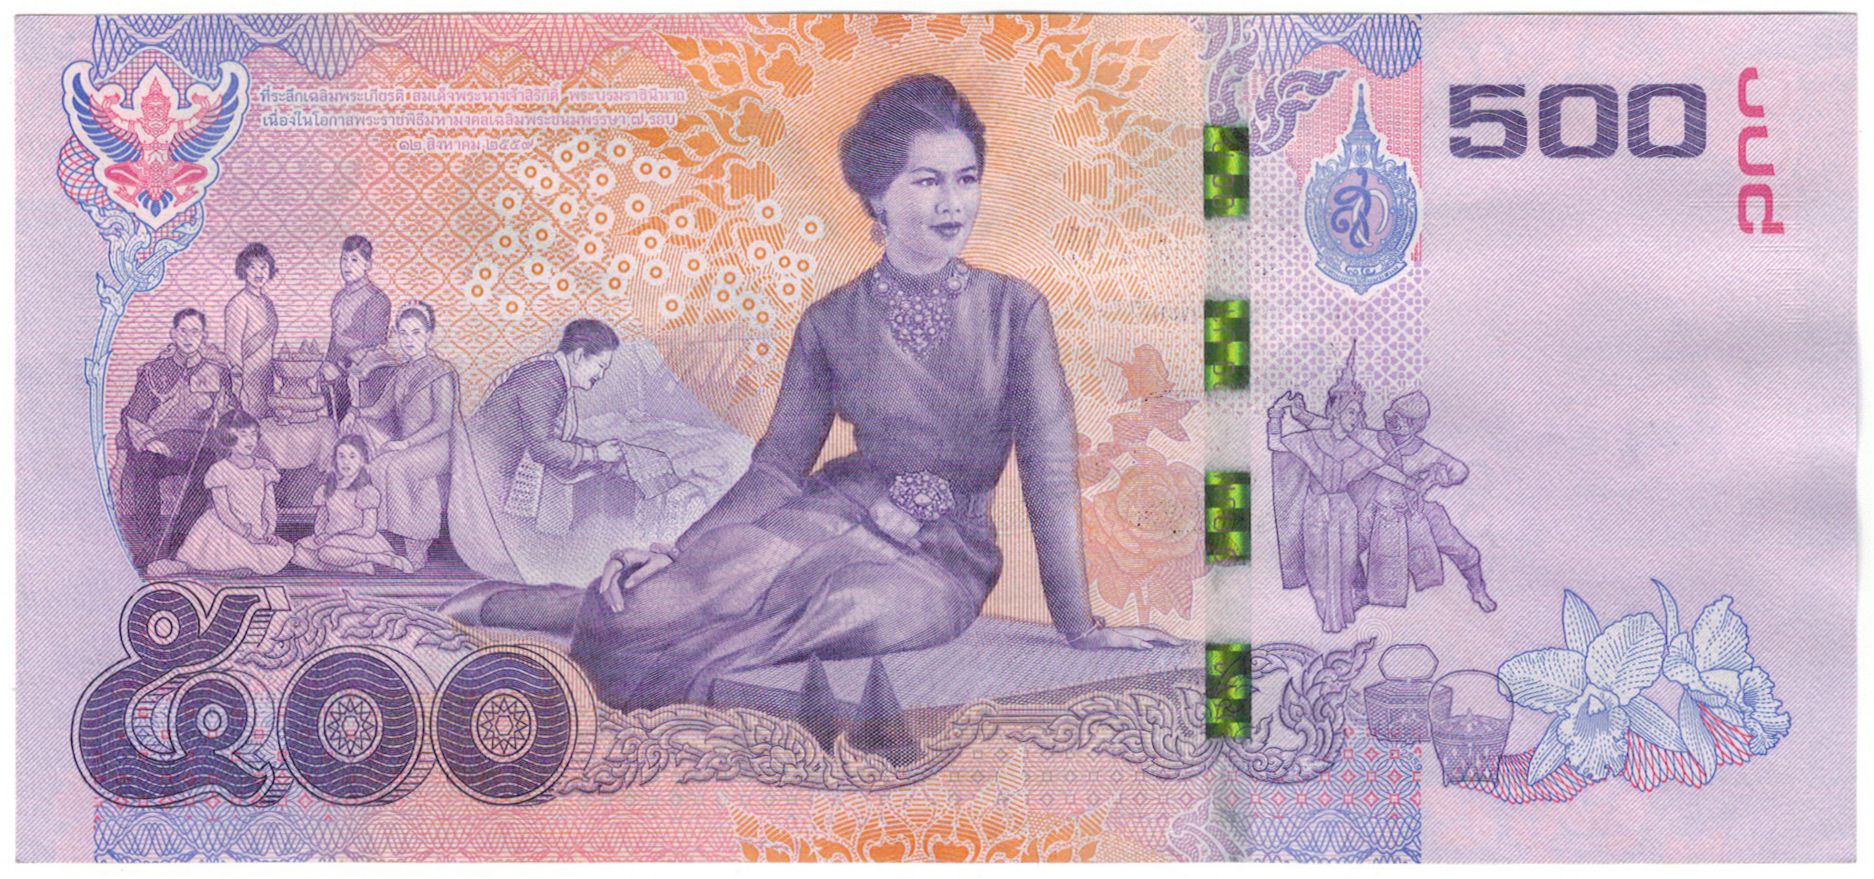 500 бат. 500 Бат Тайланд. Тайланд банкнота 500 бат. Тайские деньги 500 бат. Купюра 500 бат.